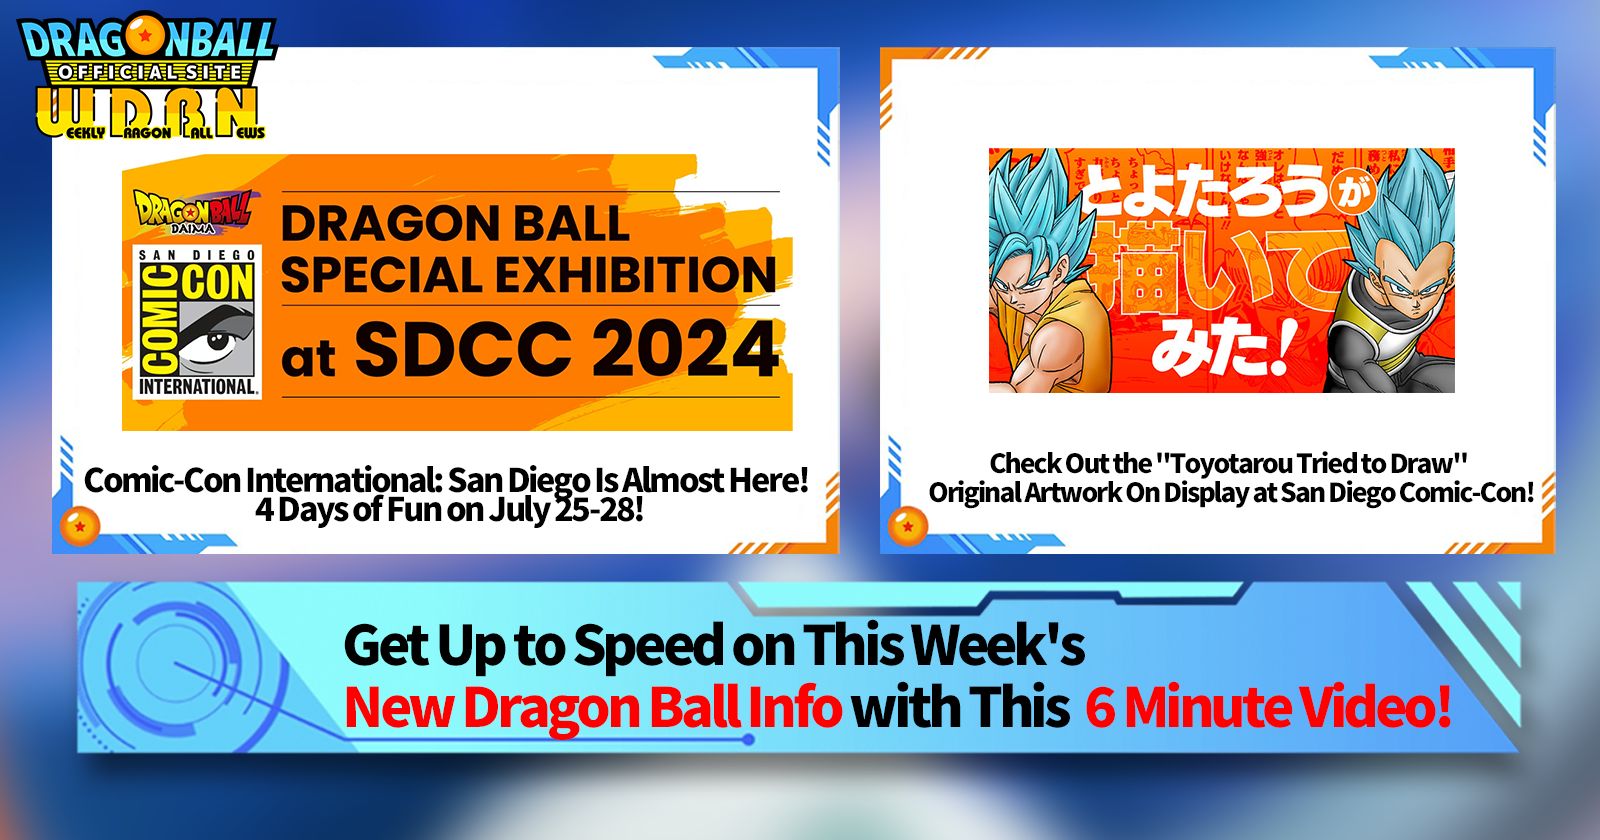 [July 22nd] Weekly Dragon Ball News Broadcast!